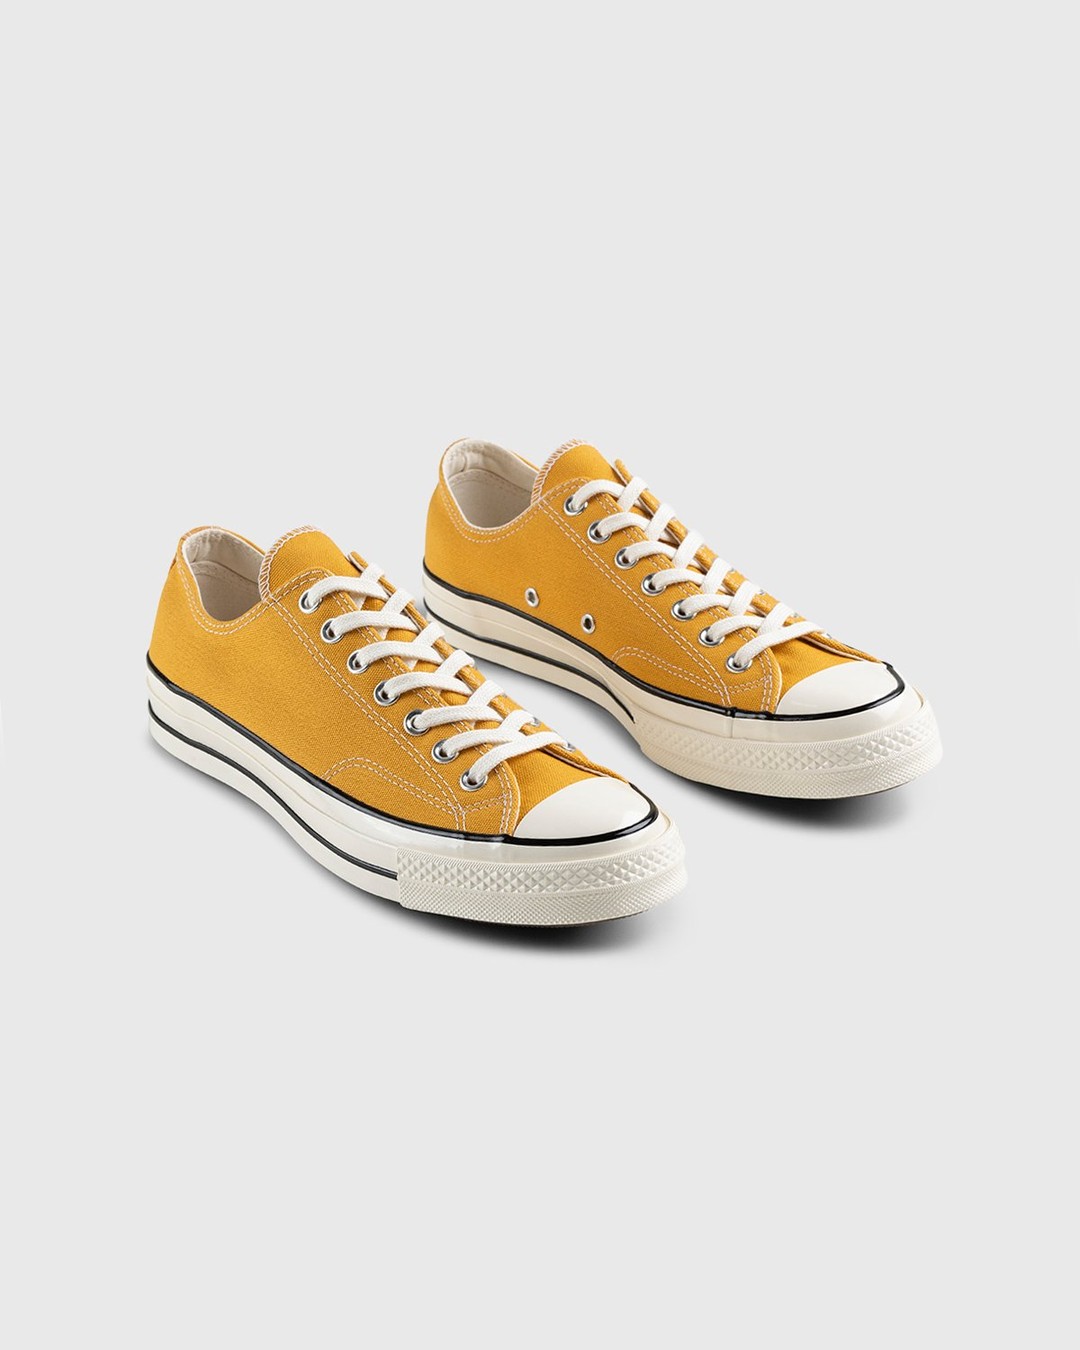 Converse – Chuck 70 Ox Sunflower/Black/Egret - Low Top Sneakers - Orange - Image 4